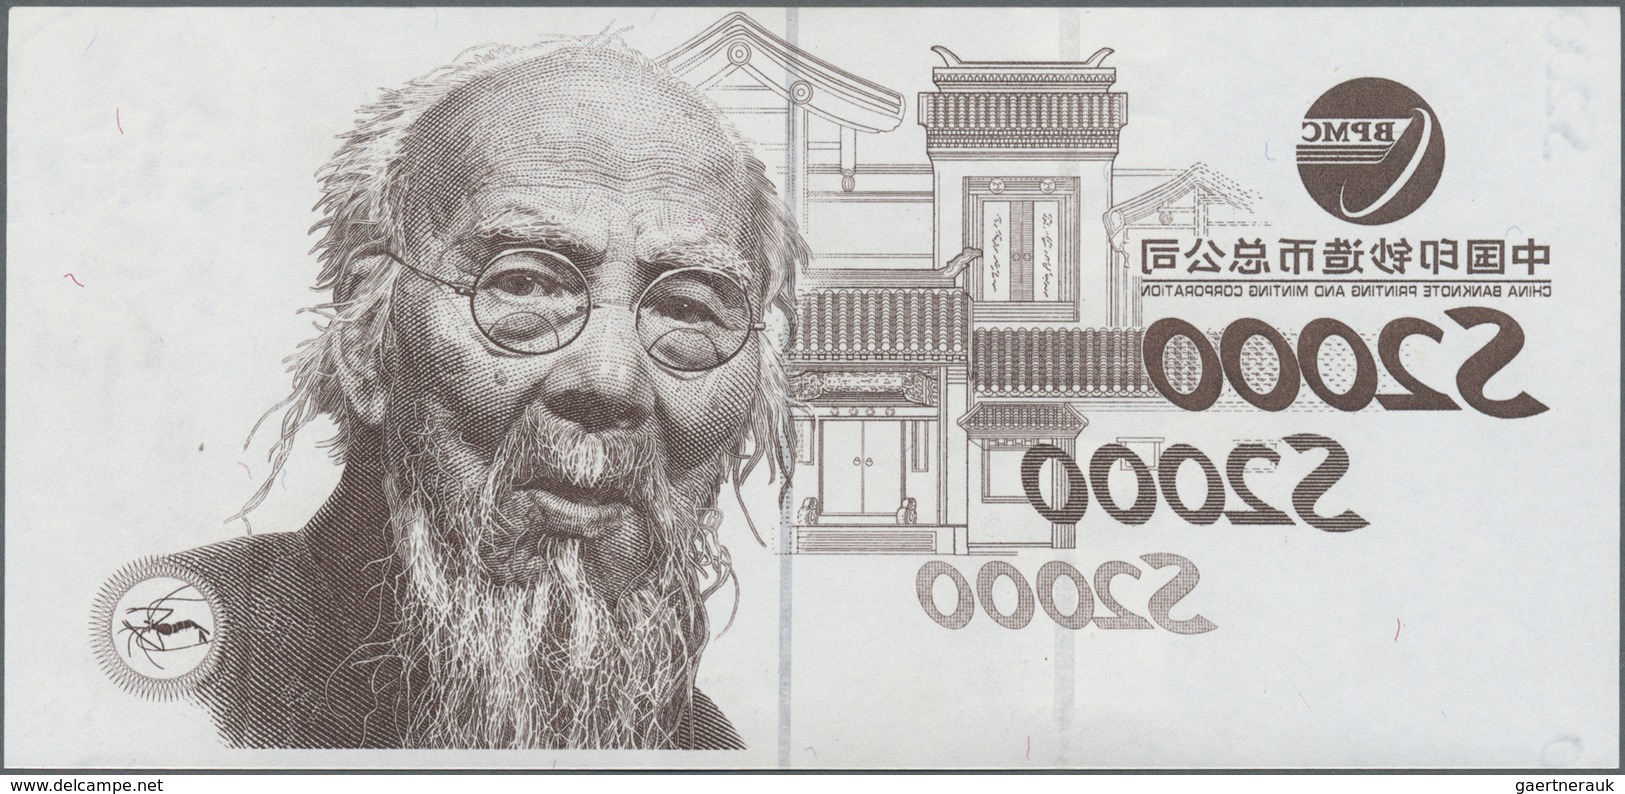 Testbanknoten: China: Rare Test Note Of The State Printer China Banknote Printing & Minting Co. With - Specimen